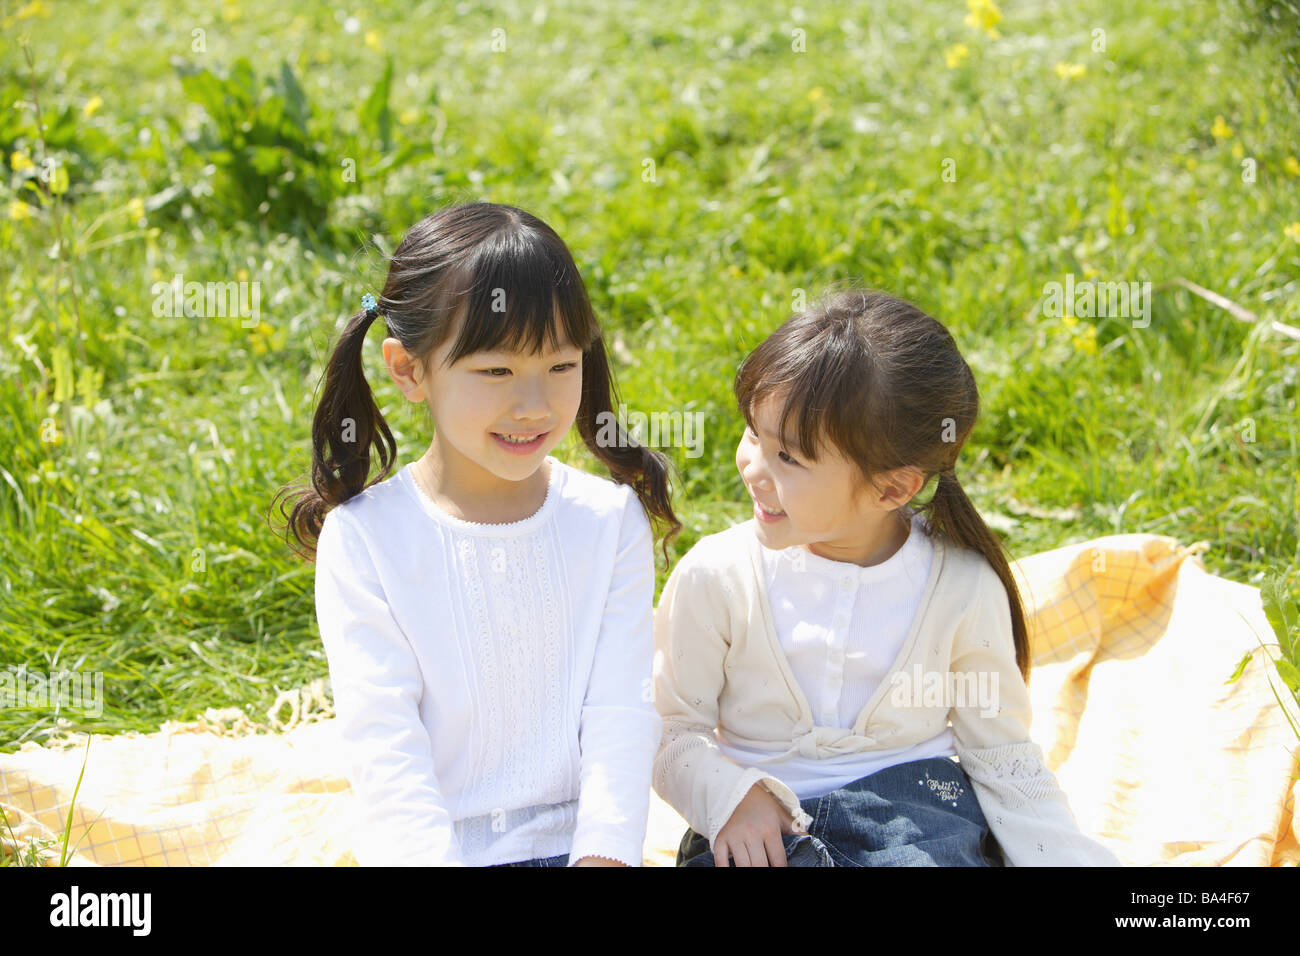 Japanese girls sitting in a garden Stock Photo